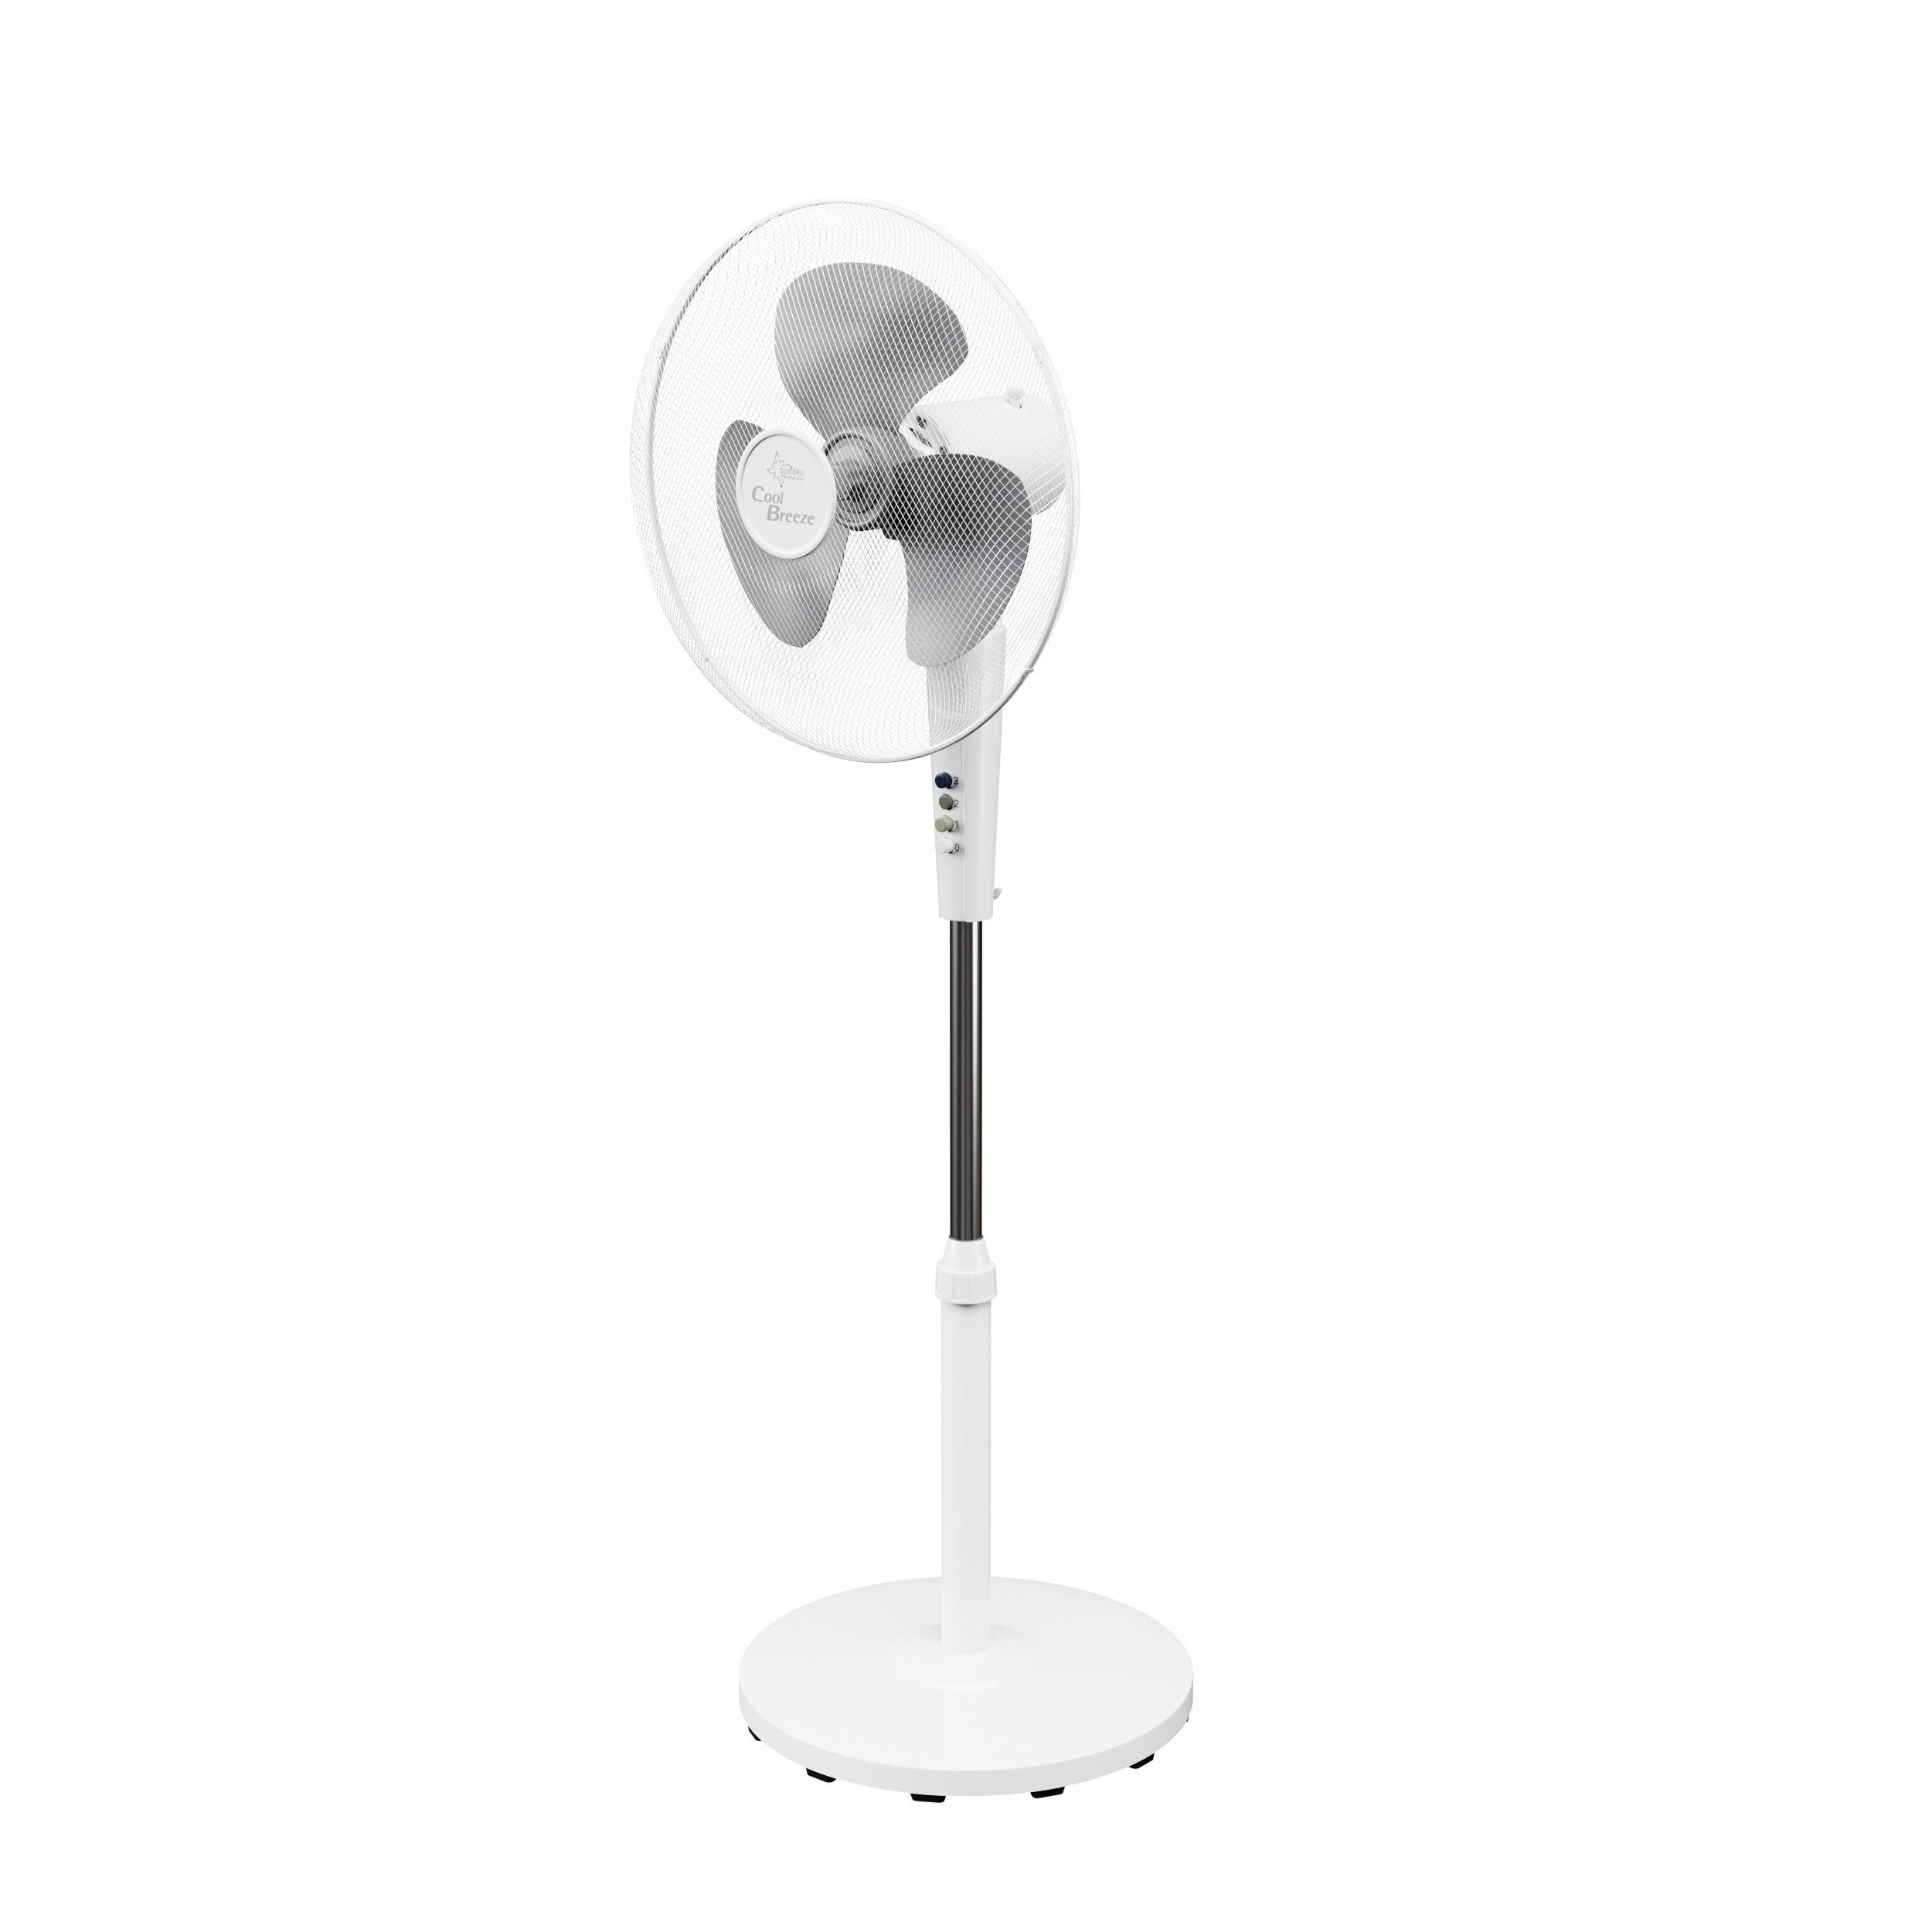 Suntec Wellness Standventilator CoolBreeze 4000 SV, Ventilator inkl. Oszillation & Tragegriff, Fan, 45 Watt